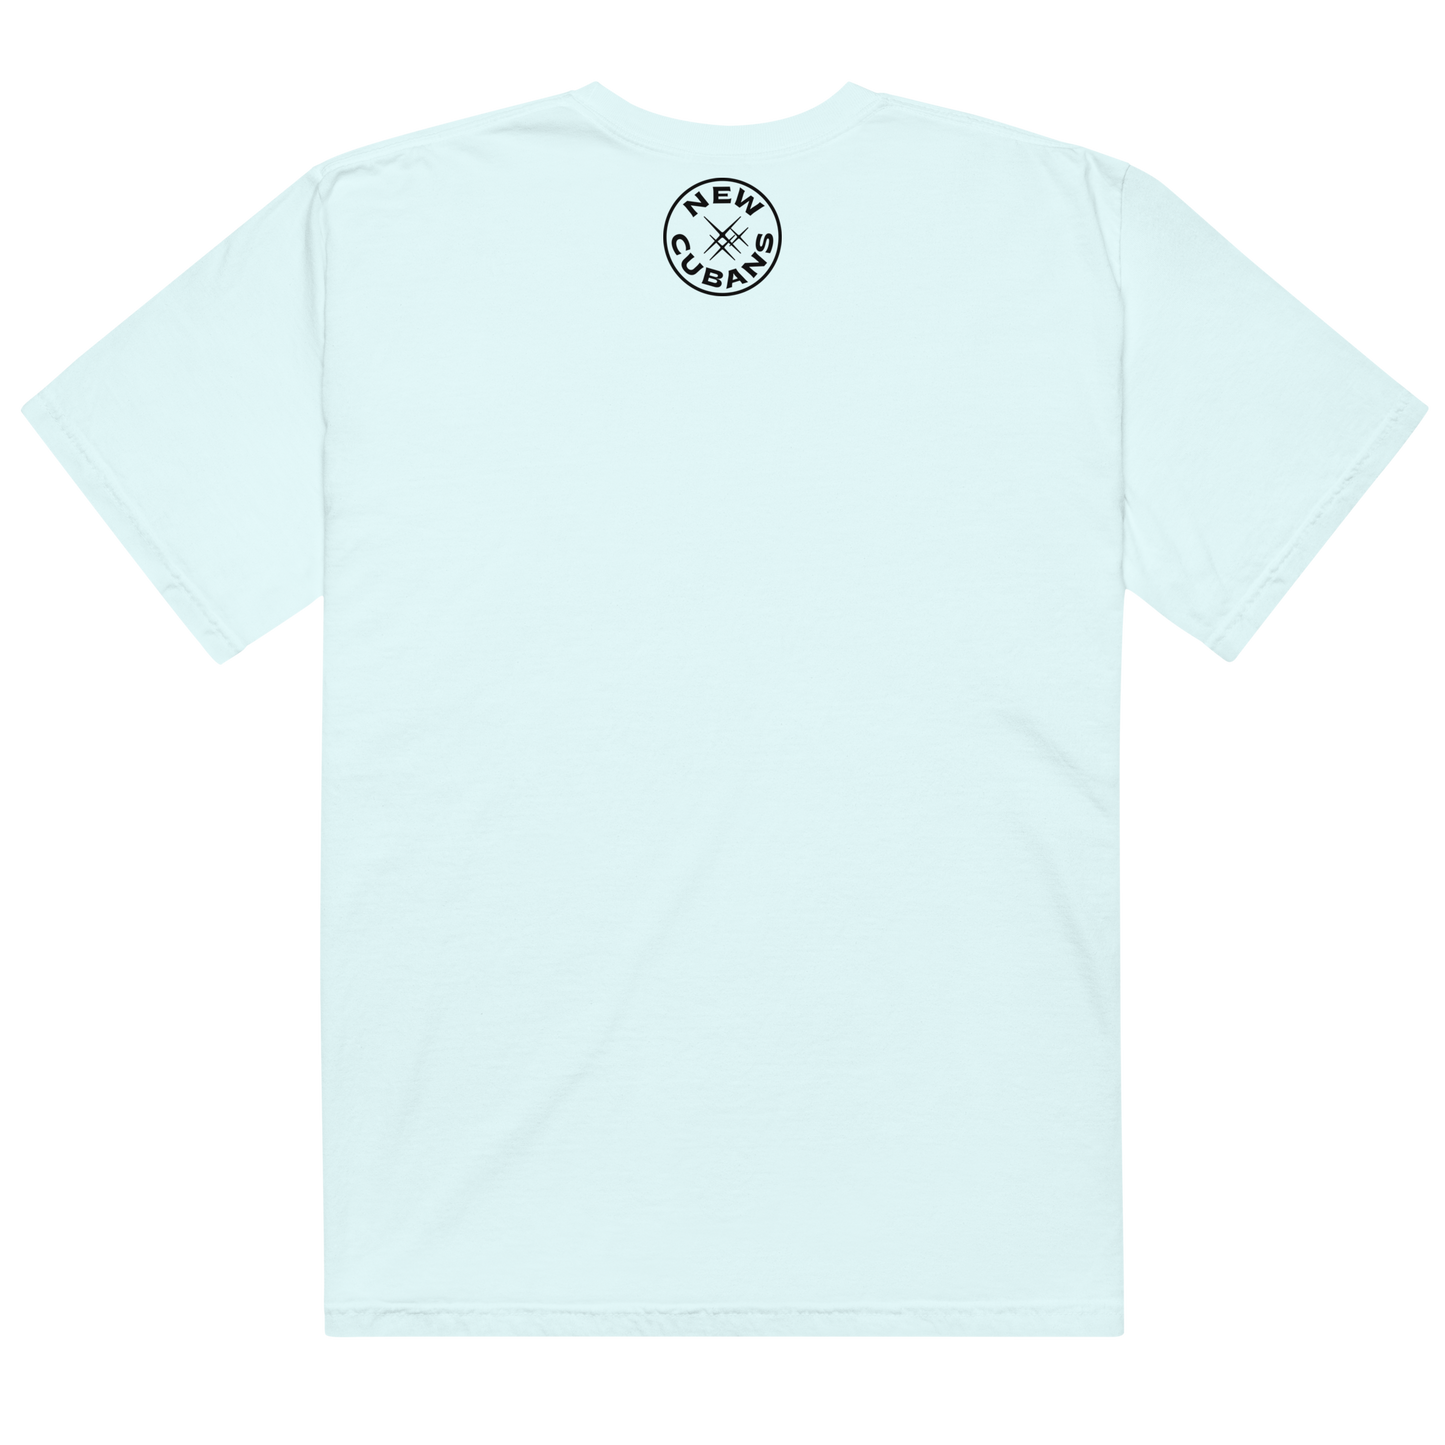 Balseros Olímpico - Unisex heavyweight t-shirt